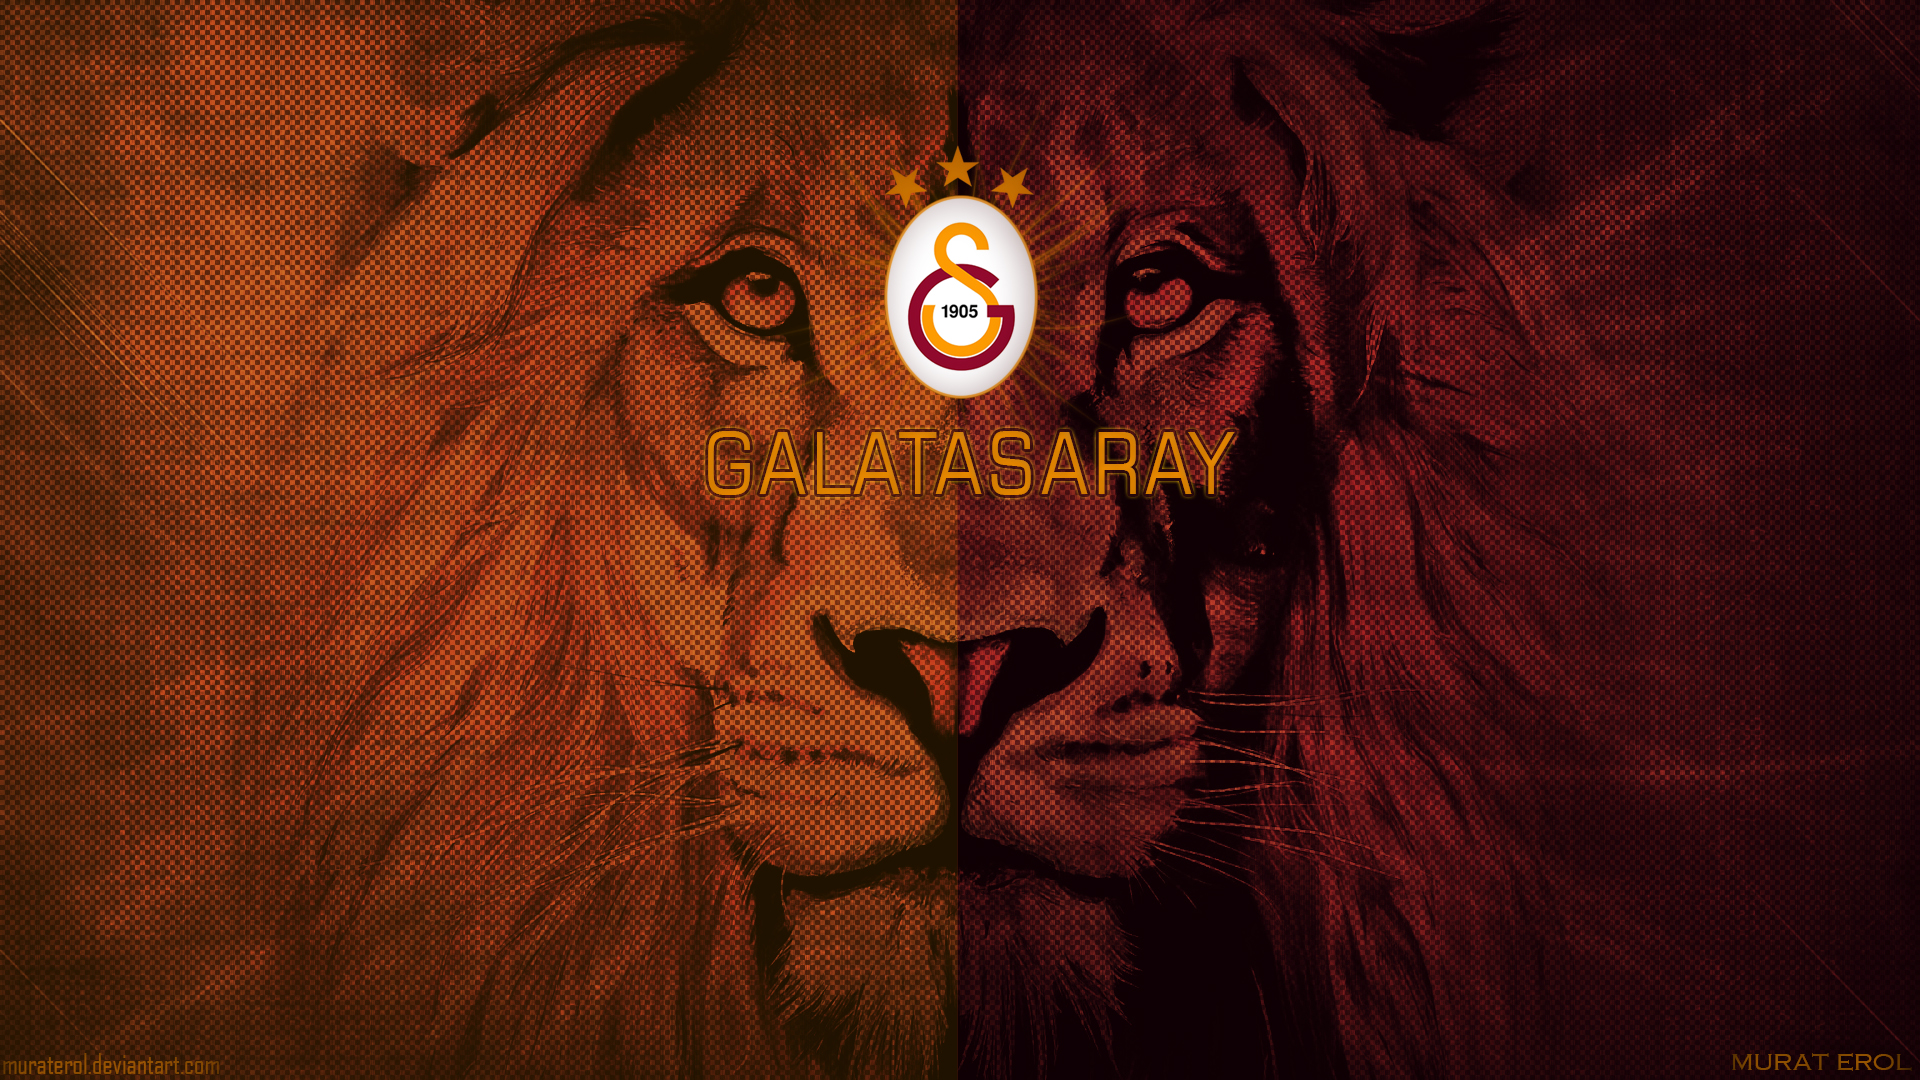 galatasaray s k, sports, emblem, lion, logo, soccer